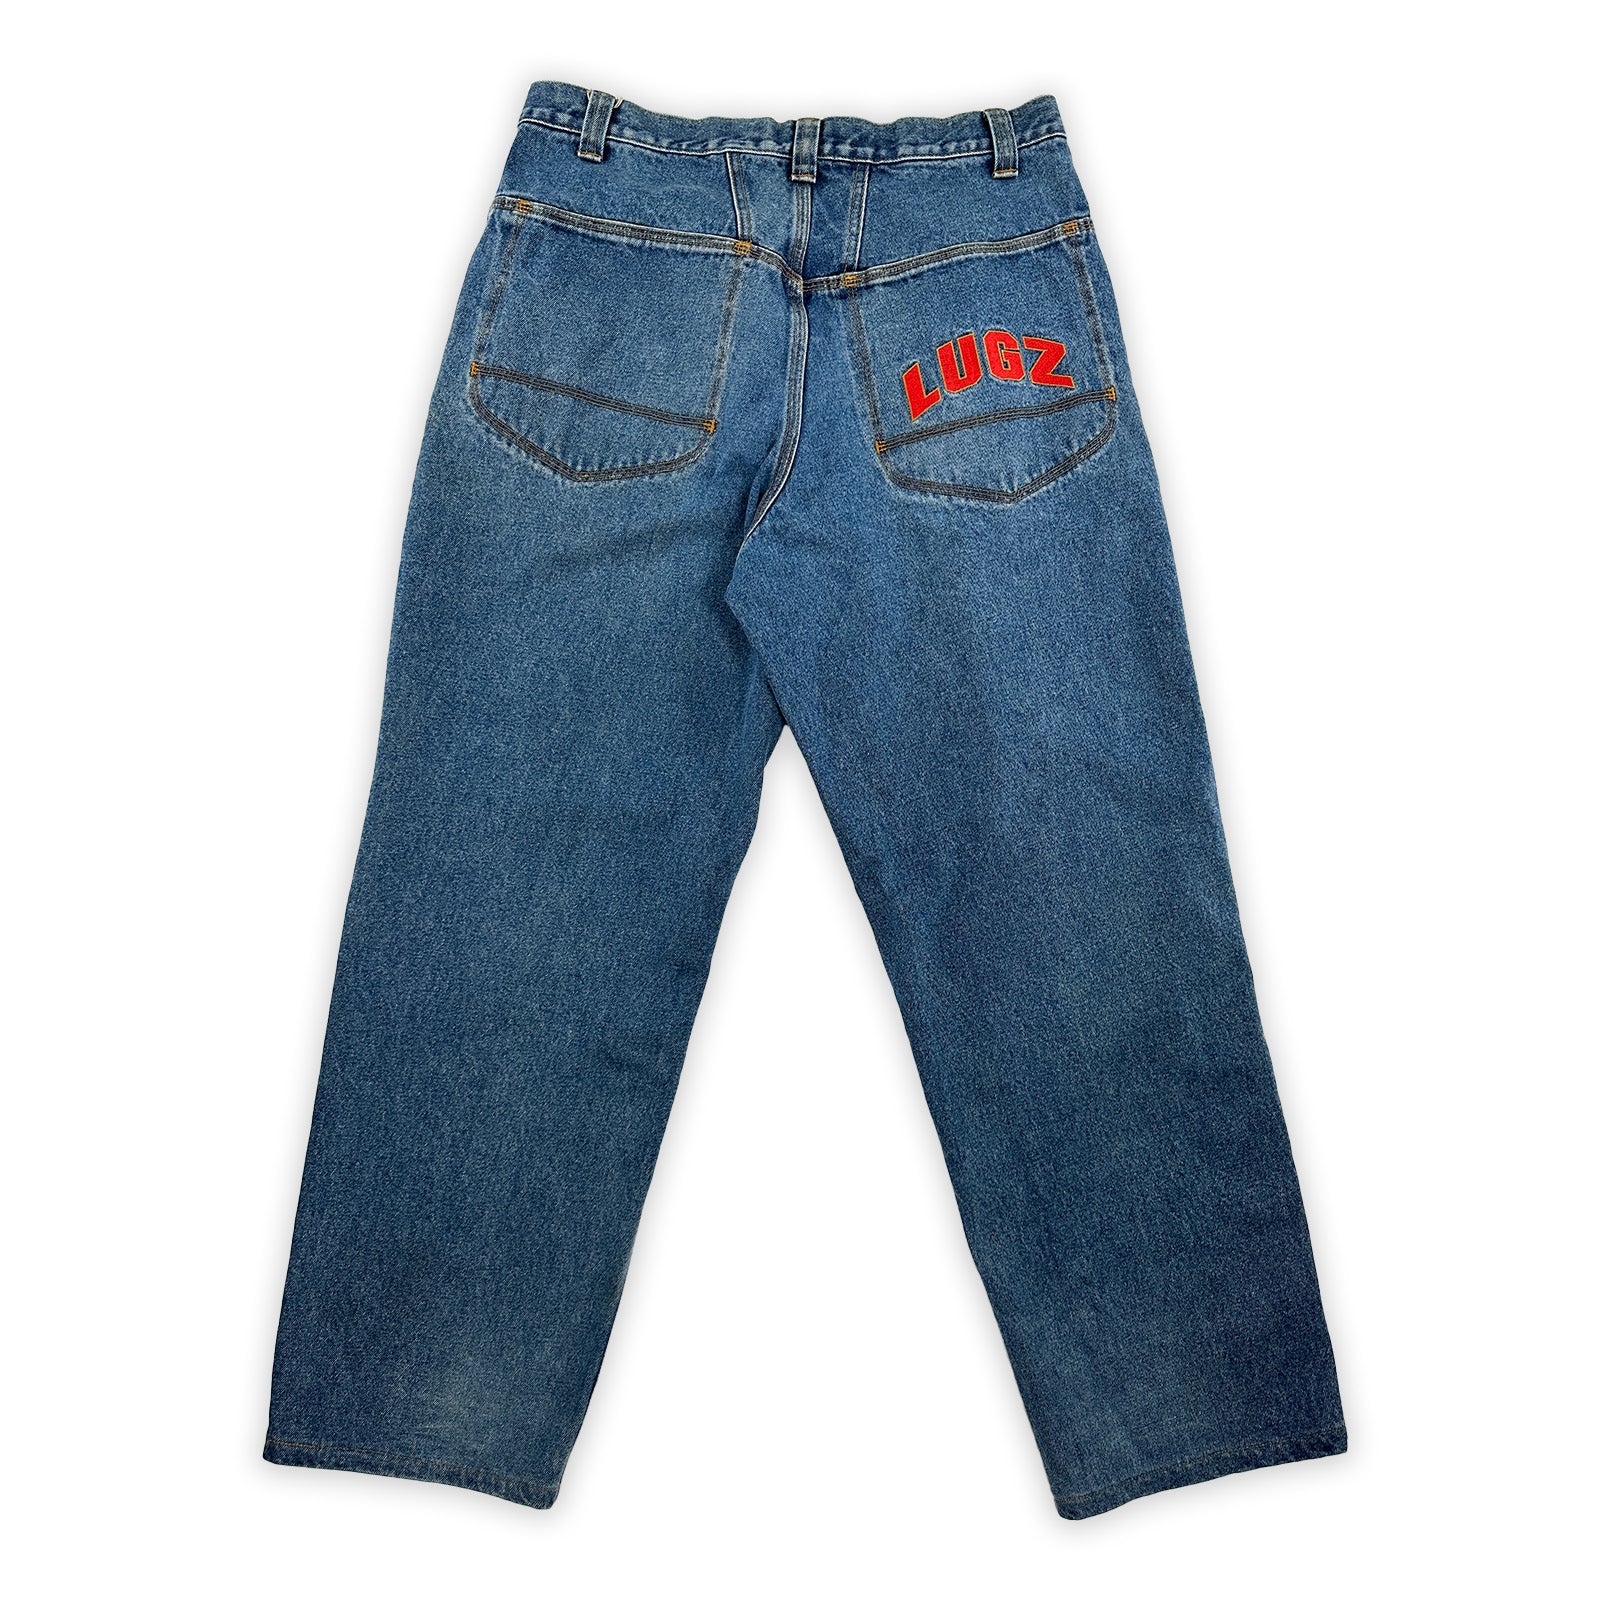 Vintage Lugz Skater Jeans - 34x30 Great Lakes Reclaimed Denim